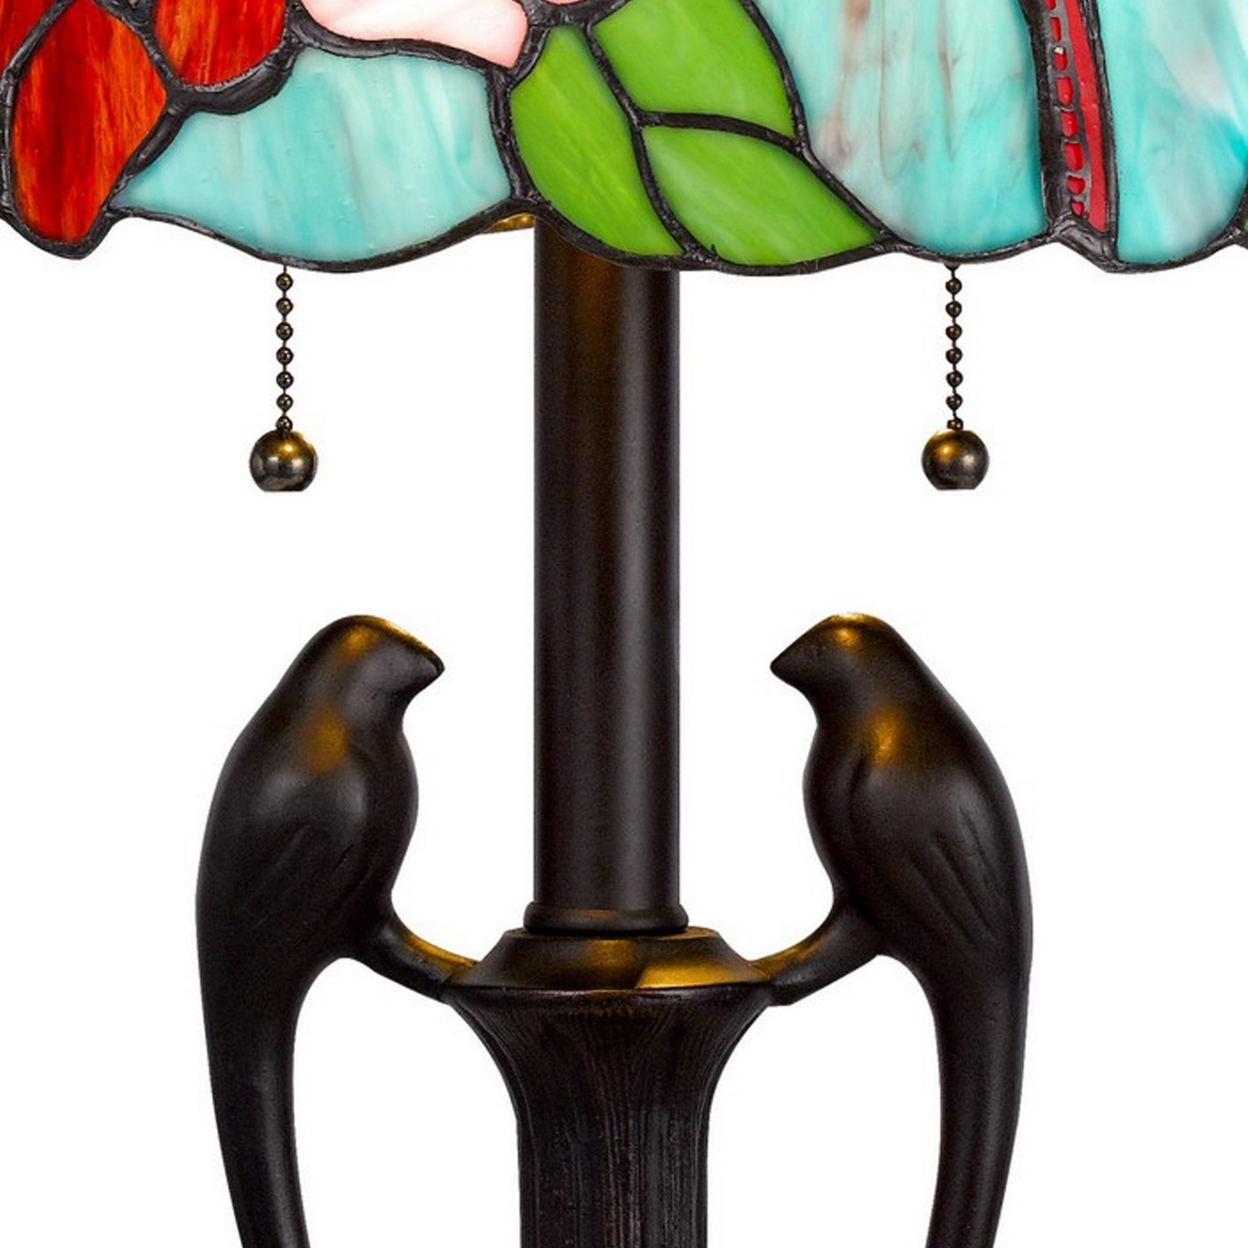 22 Inch Classic Table Lamp, Bird Art Stained Glass Shade, Antique Bronze- Saltoro Sherpi